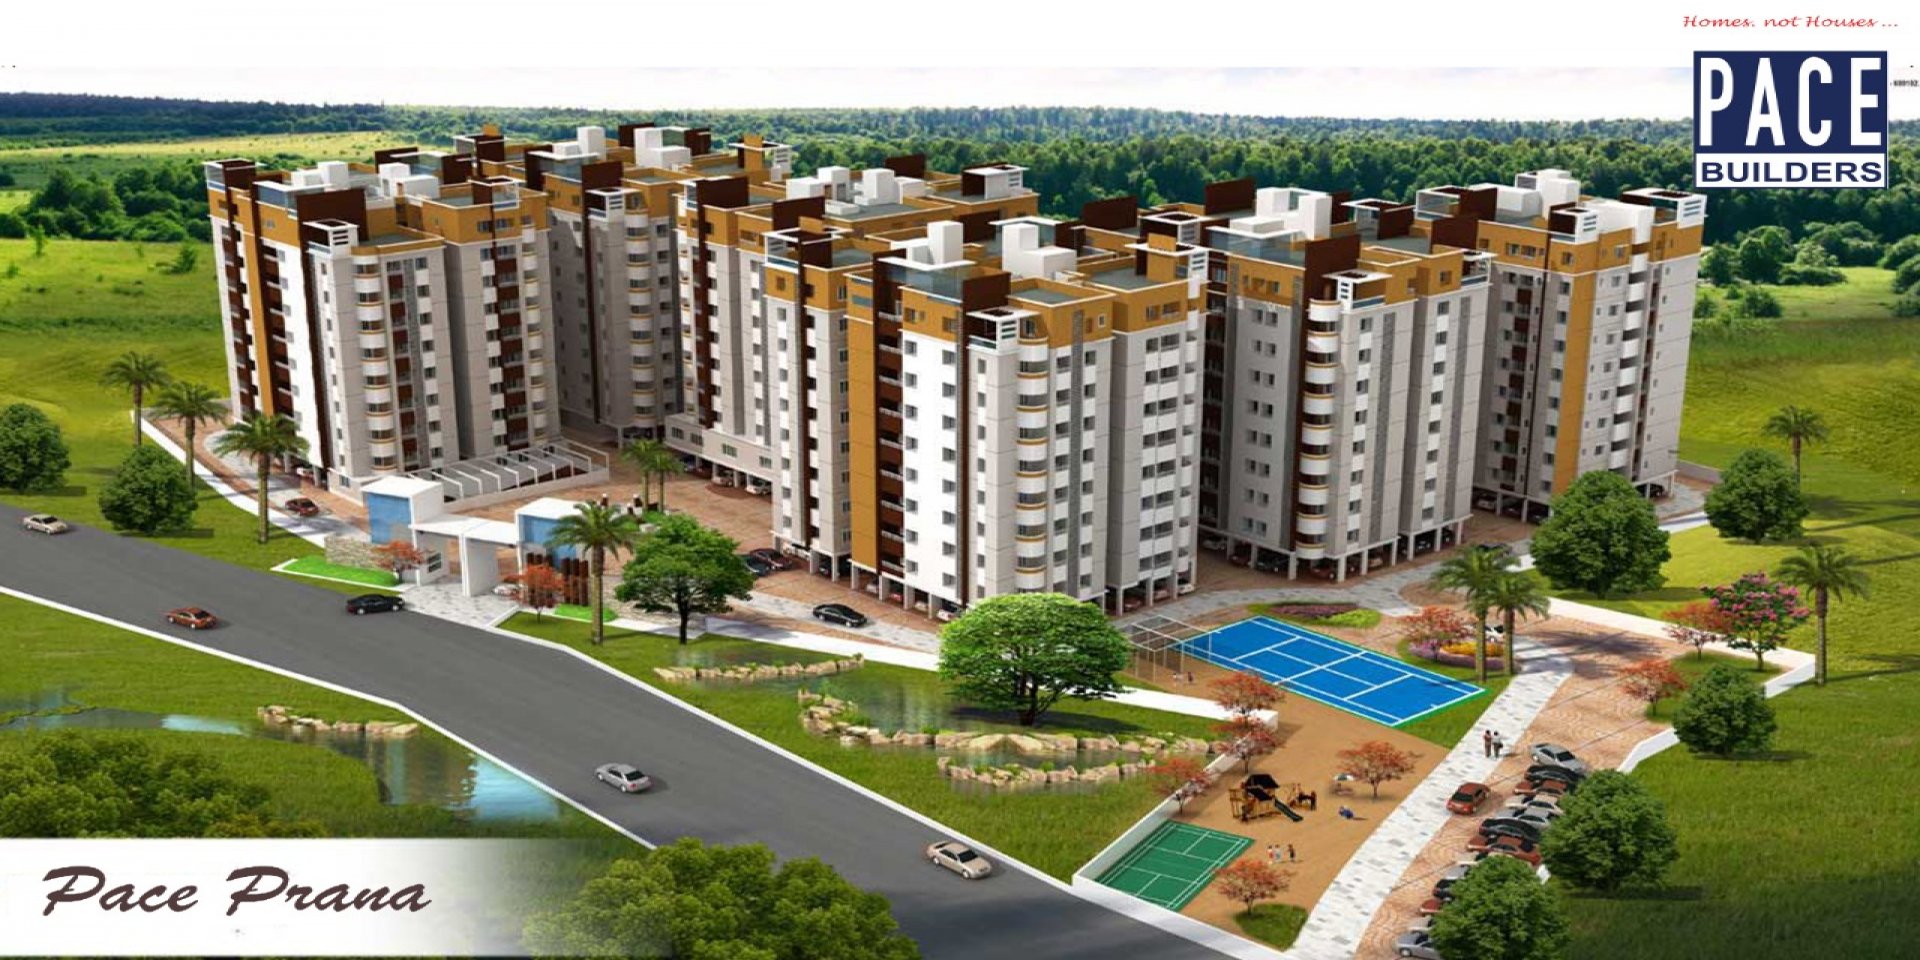 2, 3 BHK Apartment for sale in Anna Nagar